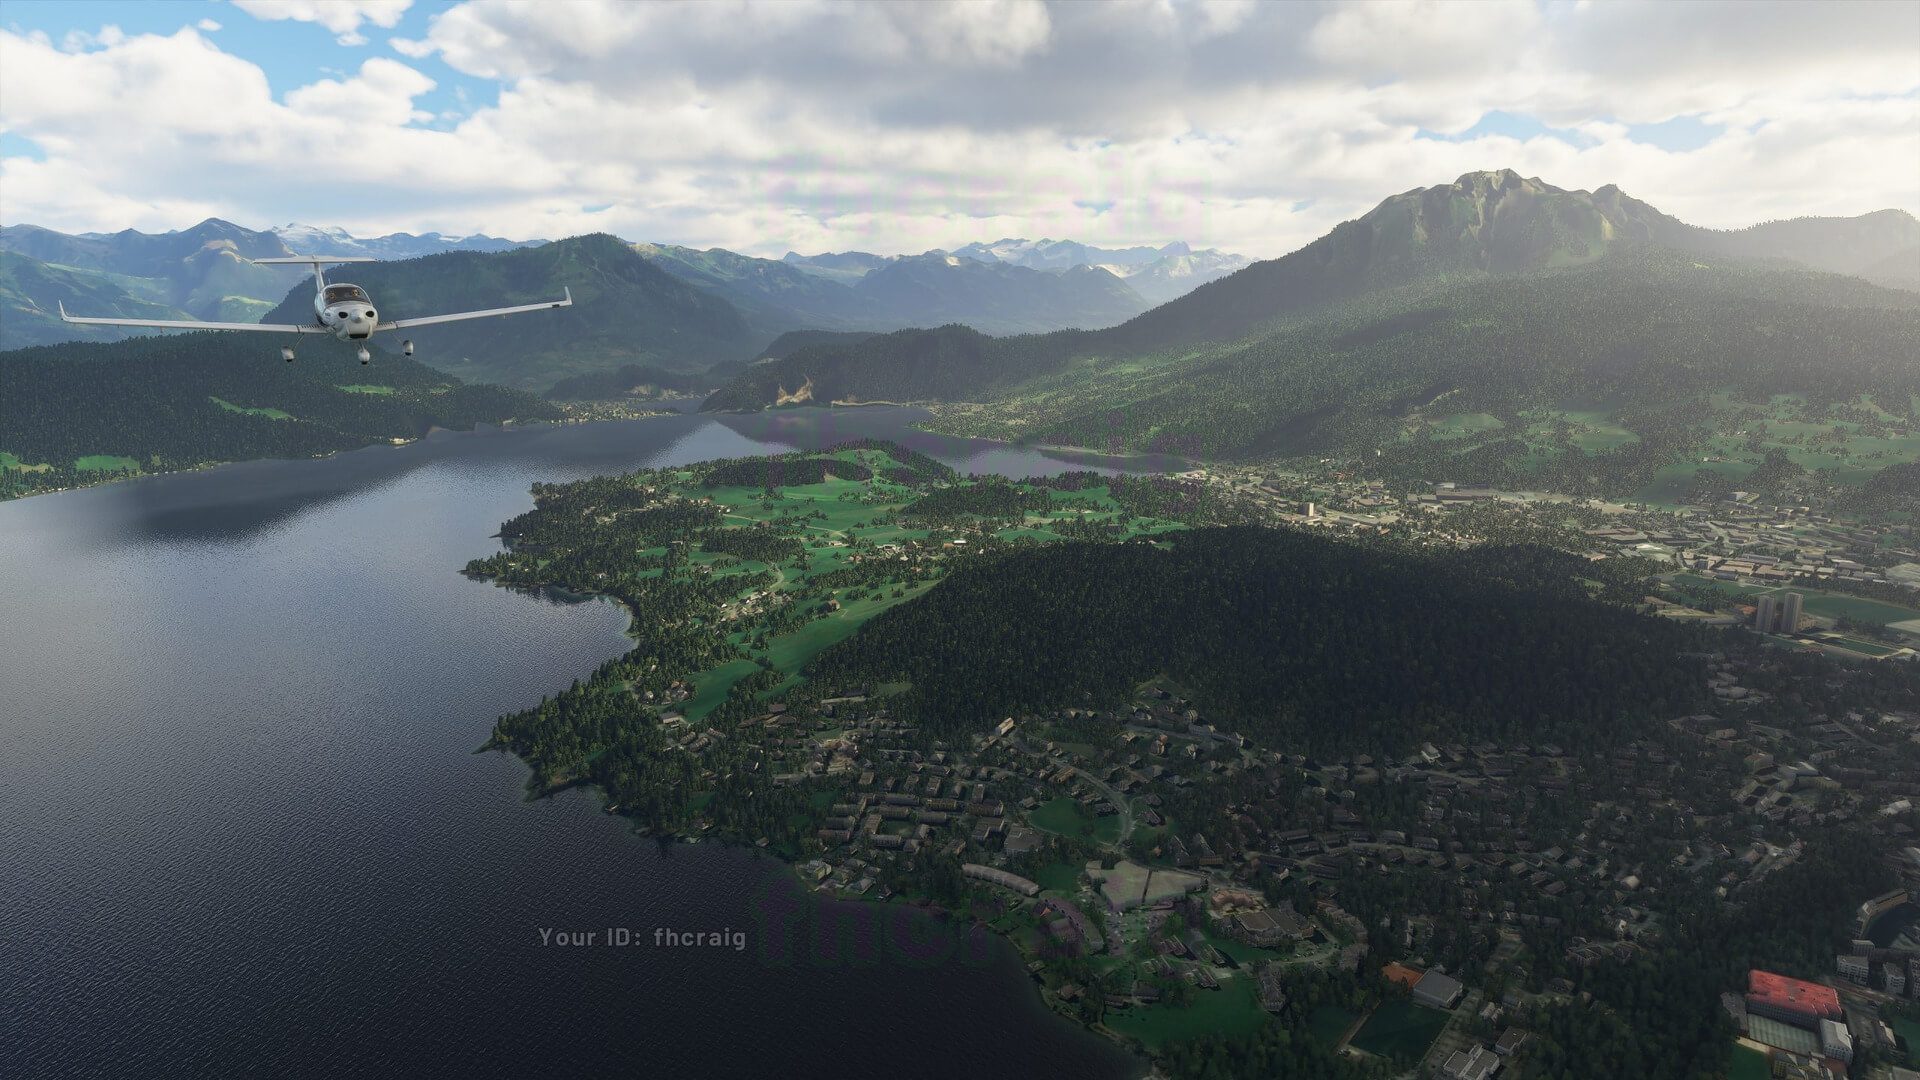 Microsoft Flight Simulator captura 5 paisaje con ciudad